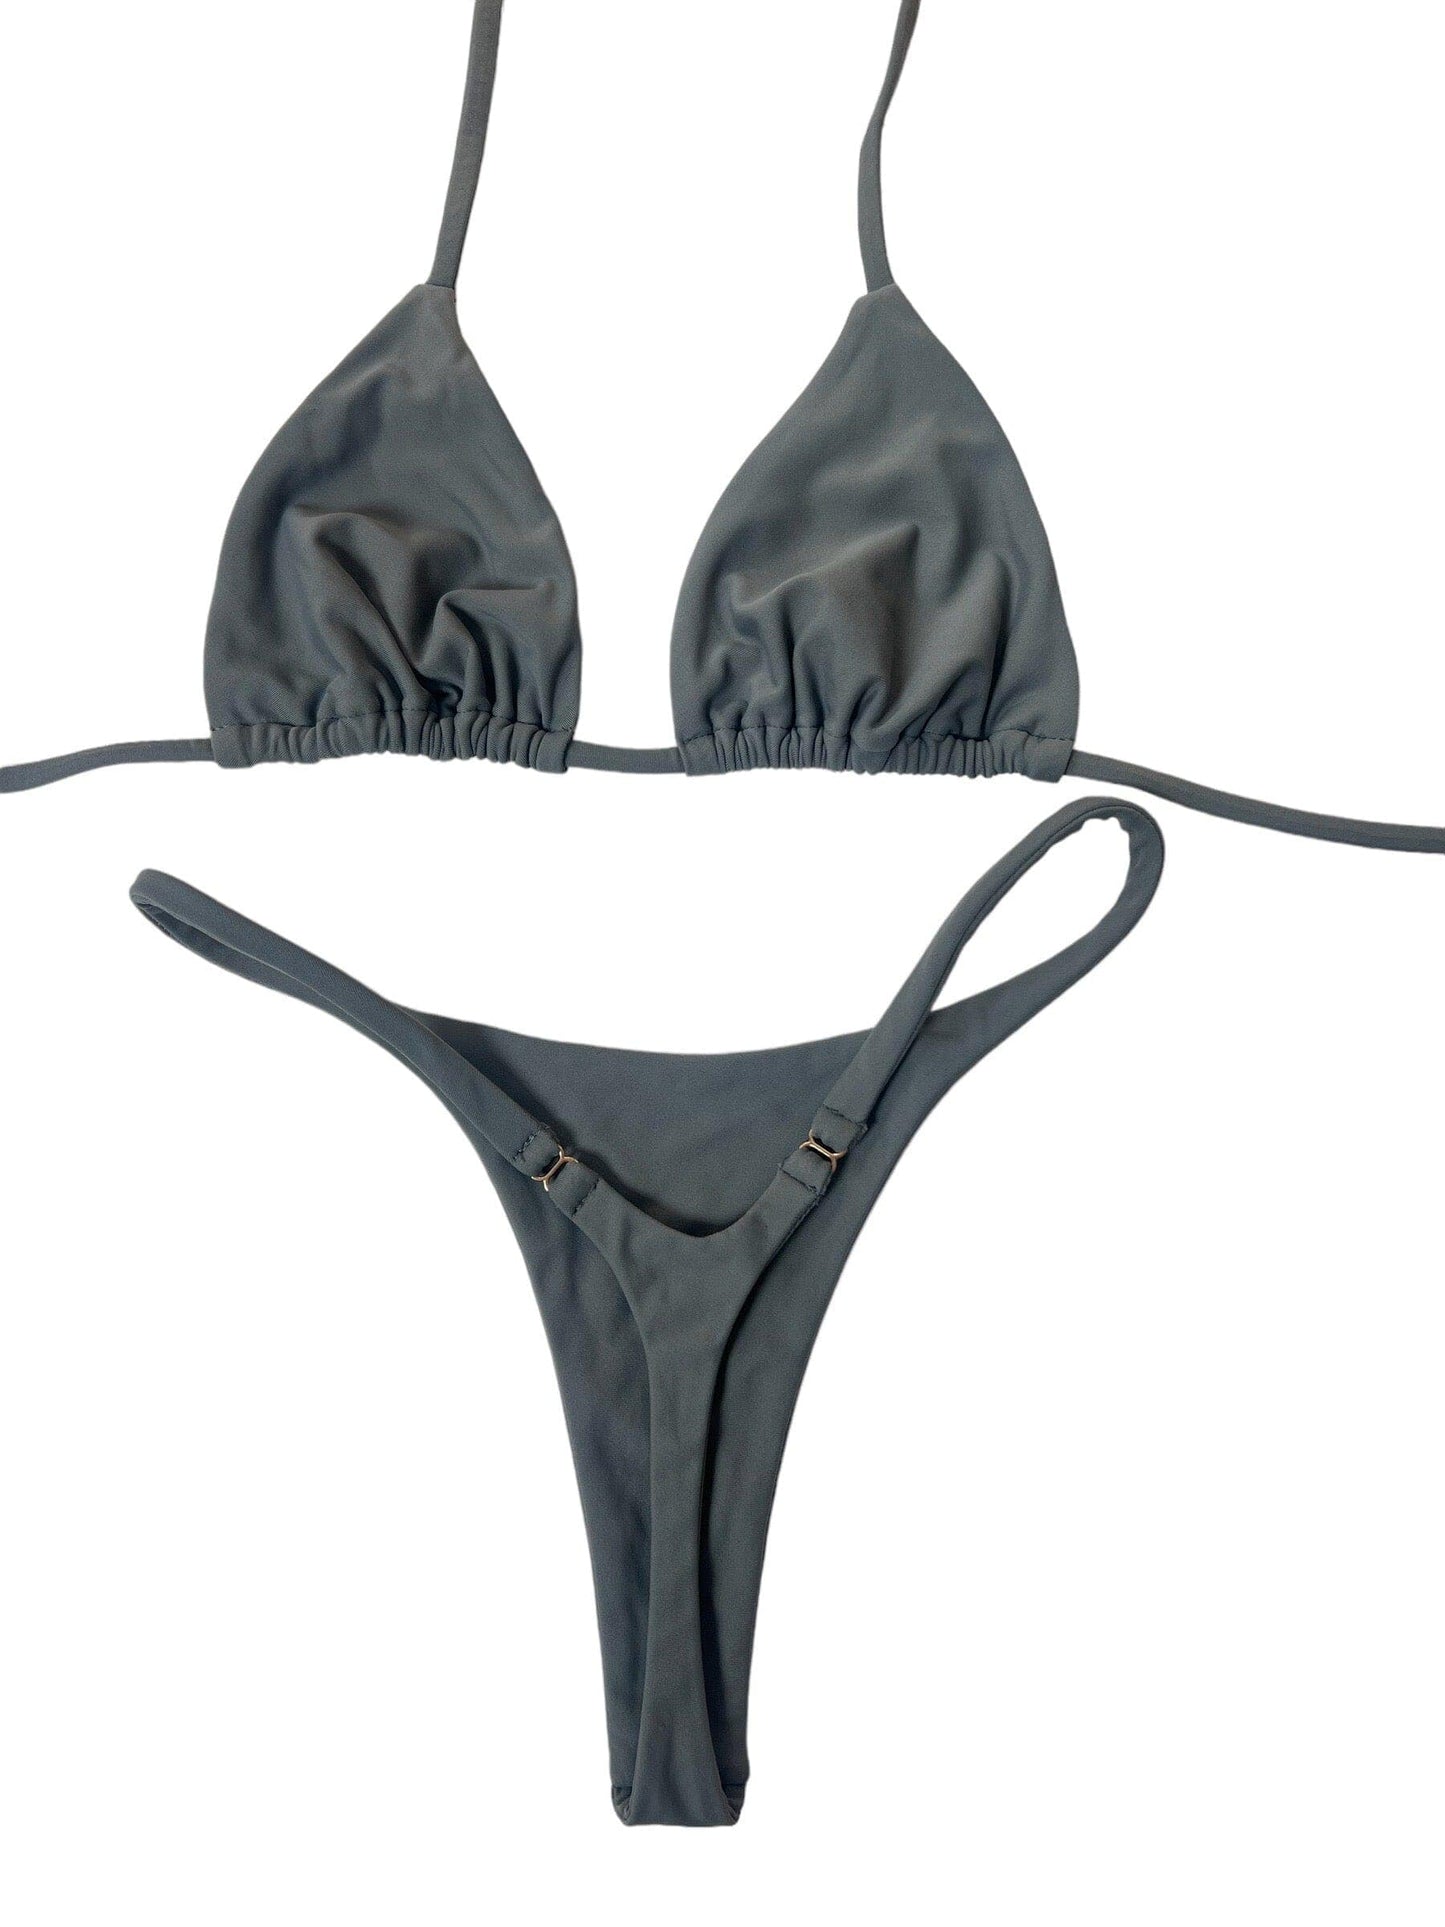 DEANGELMON Seamless Thongs for Women No Show Bikinis Panties Underwear  Comfortable Multiple Pack XL - ShopStyle